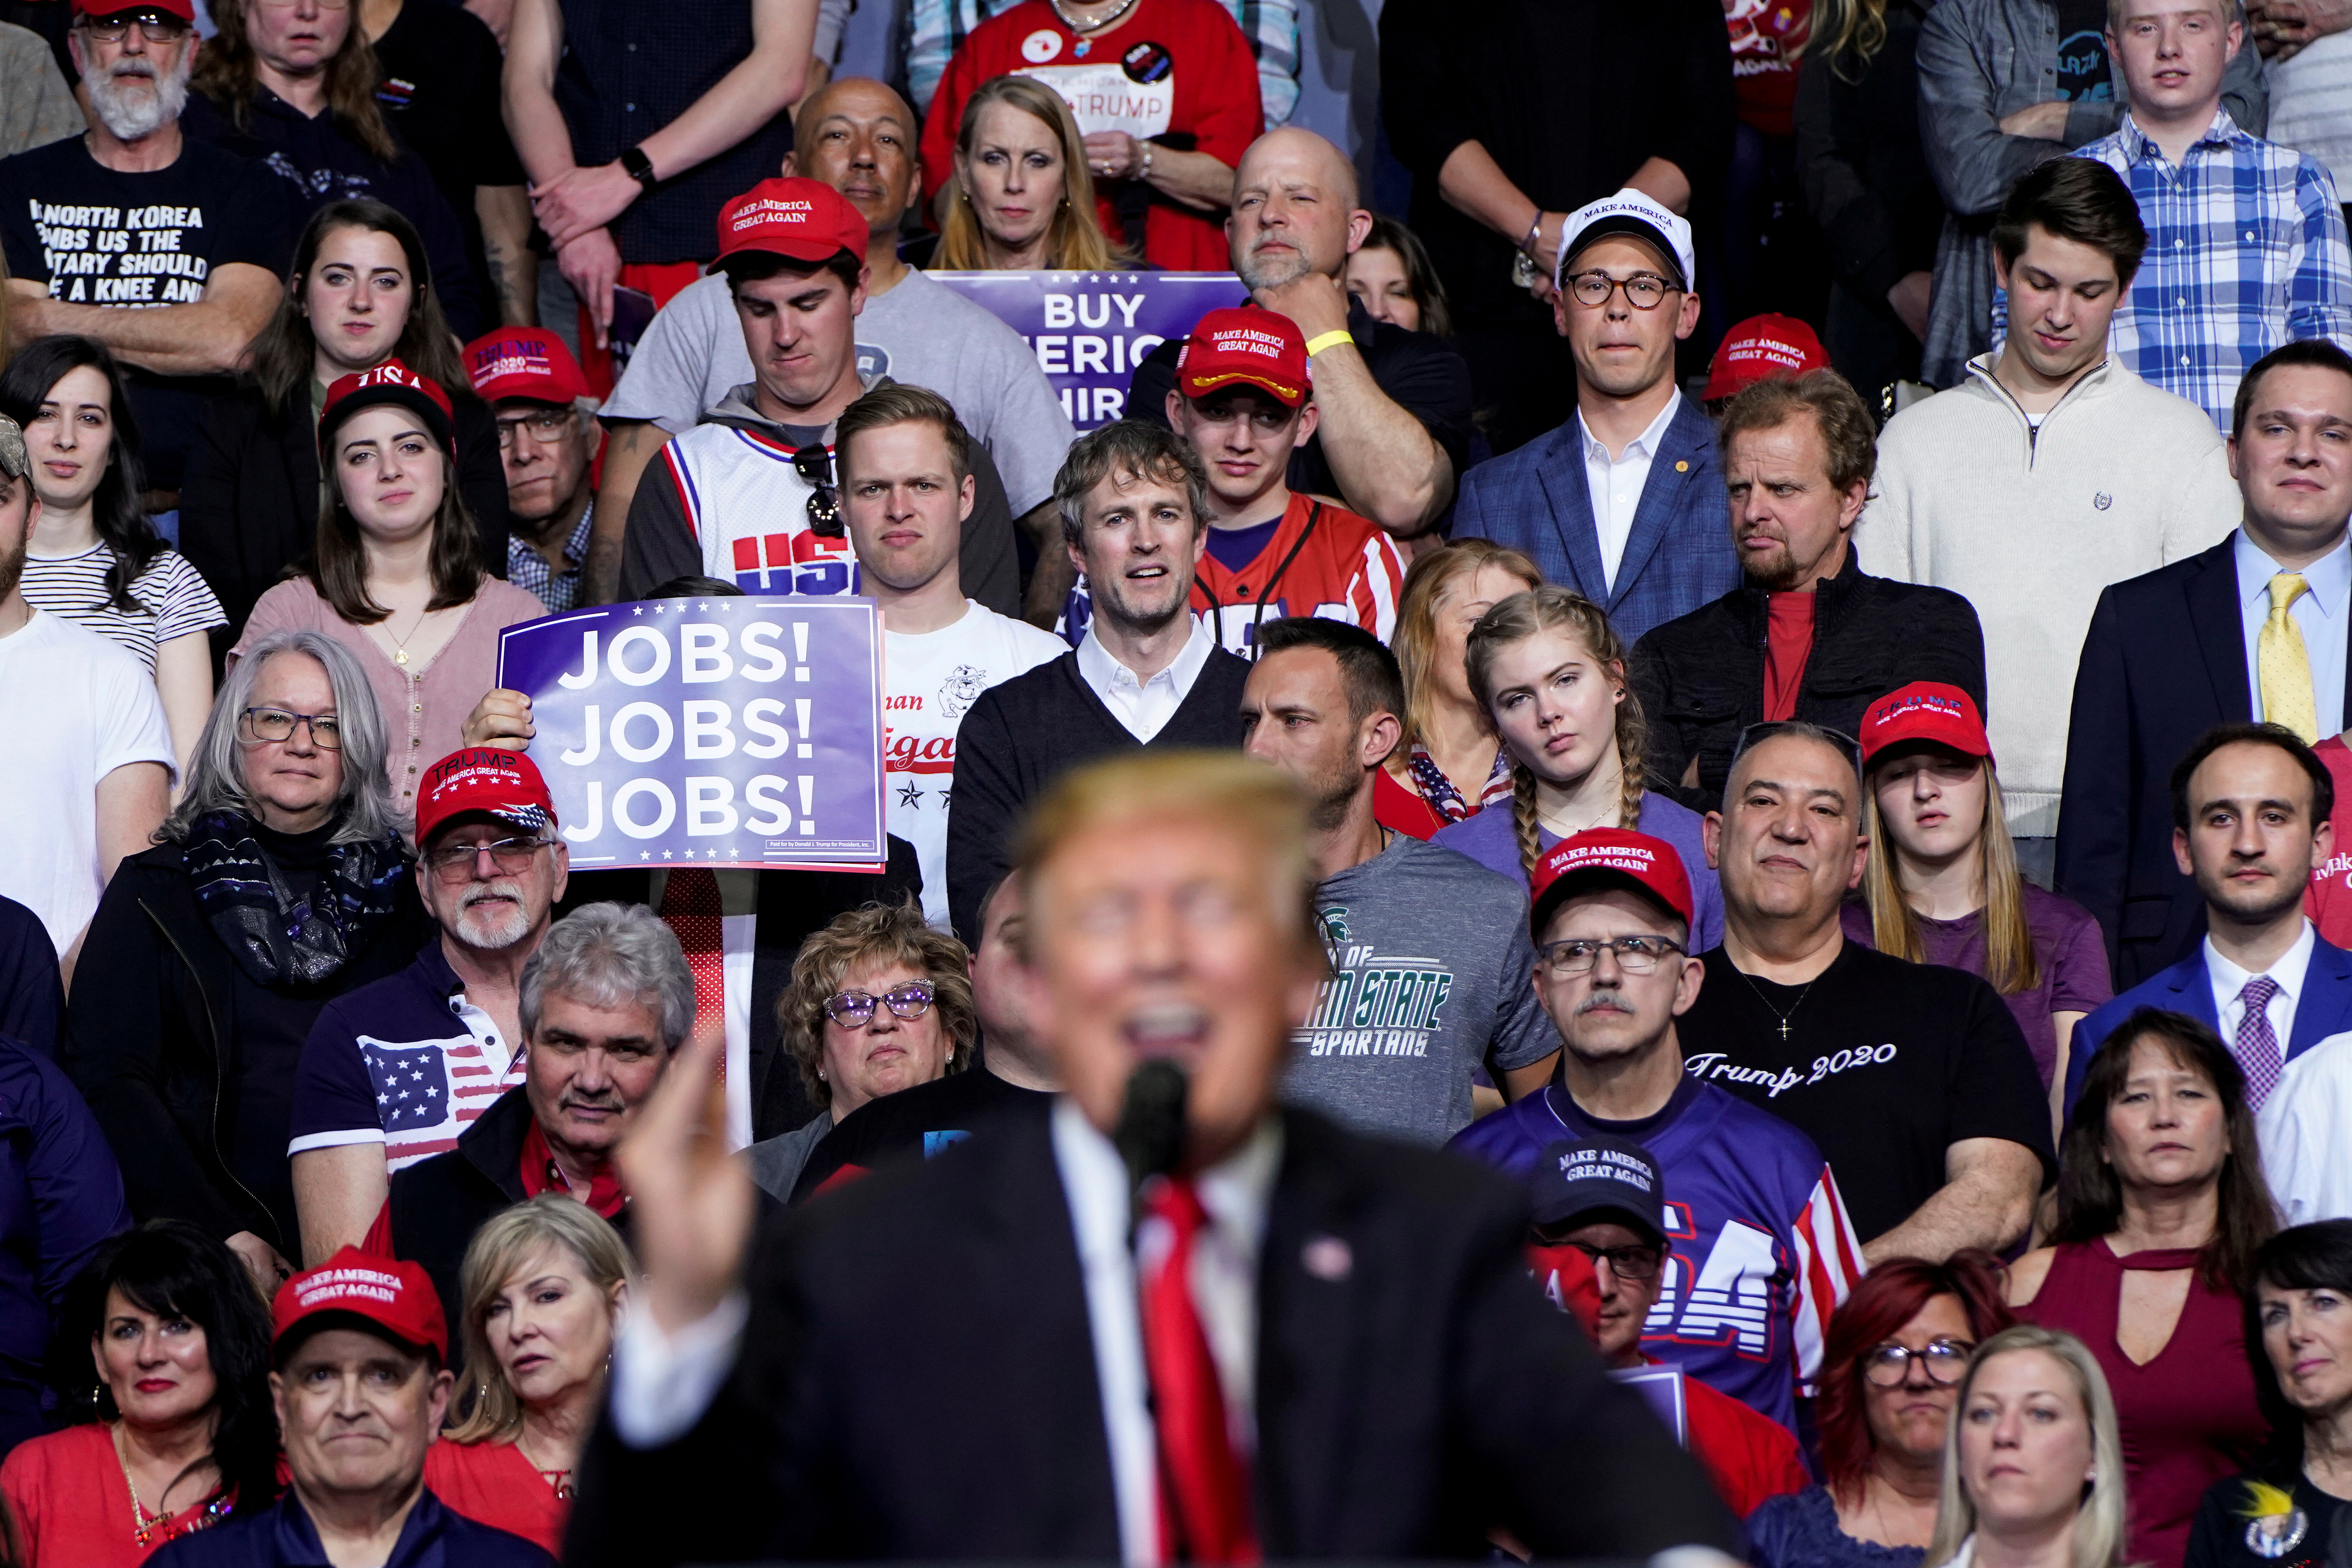 U.S. President Donald Trump speaks during a campaign rally in Grand Rapids, Michigan, U.S., March 28, 2019. REUTERS/Joshua Roberts